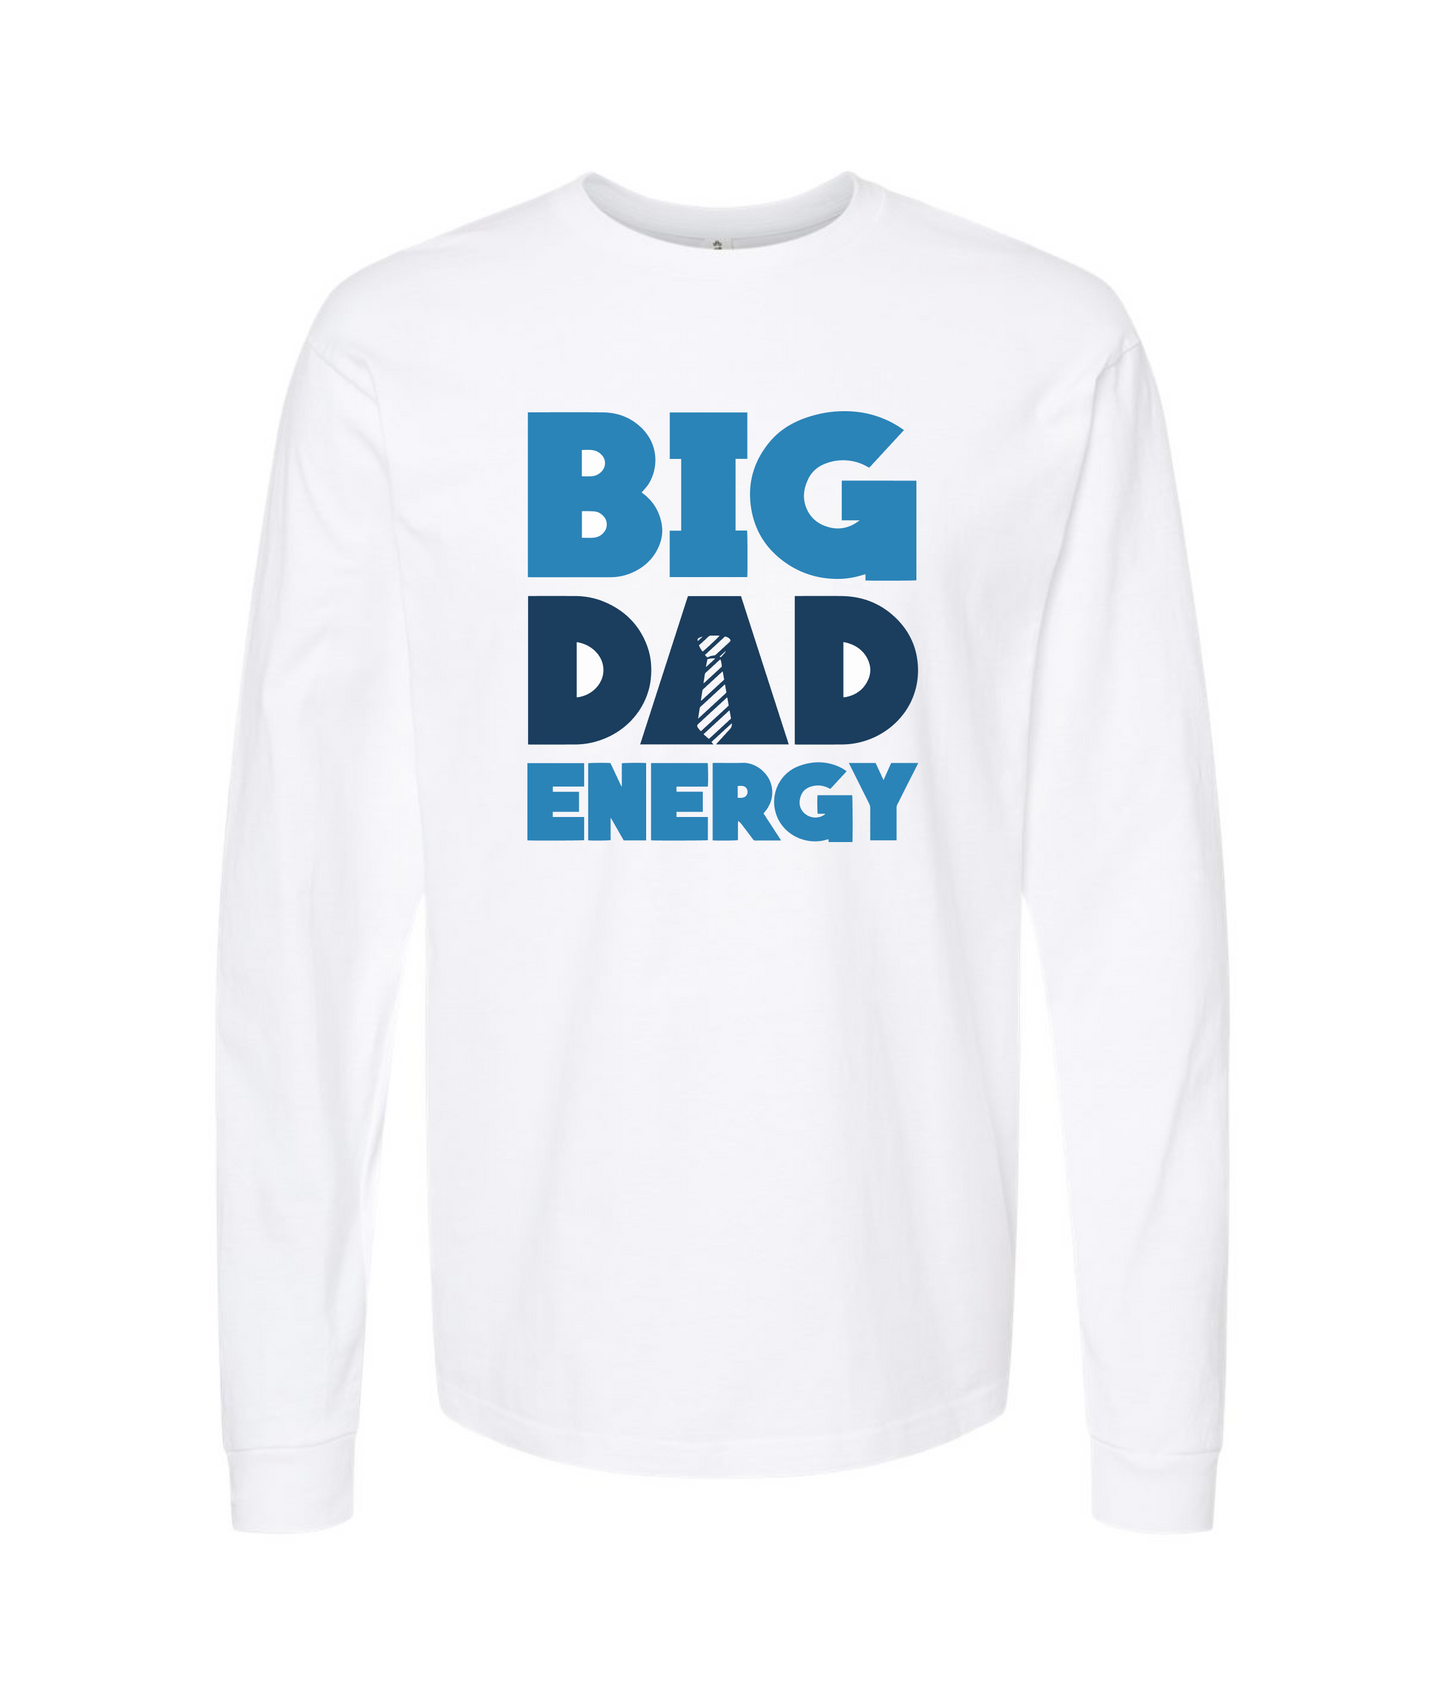 Big Dad Energy - White Long Sleeve T